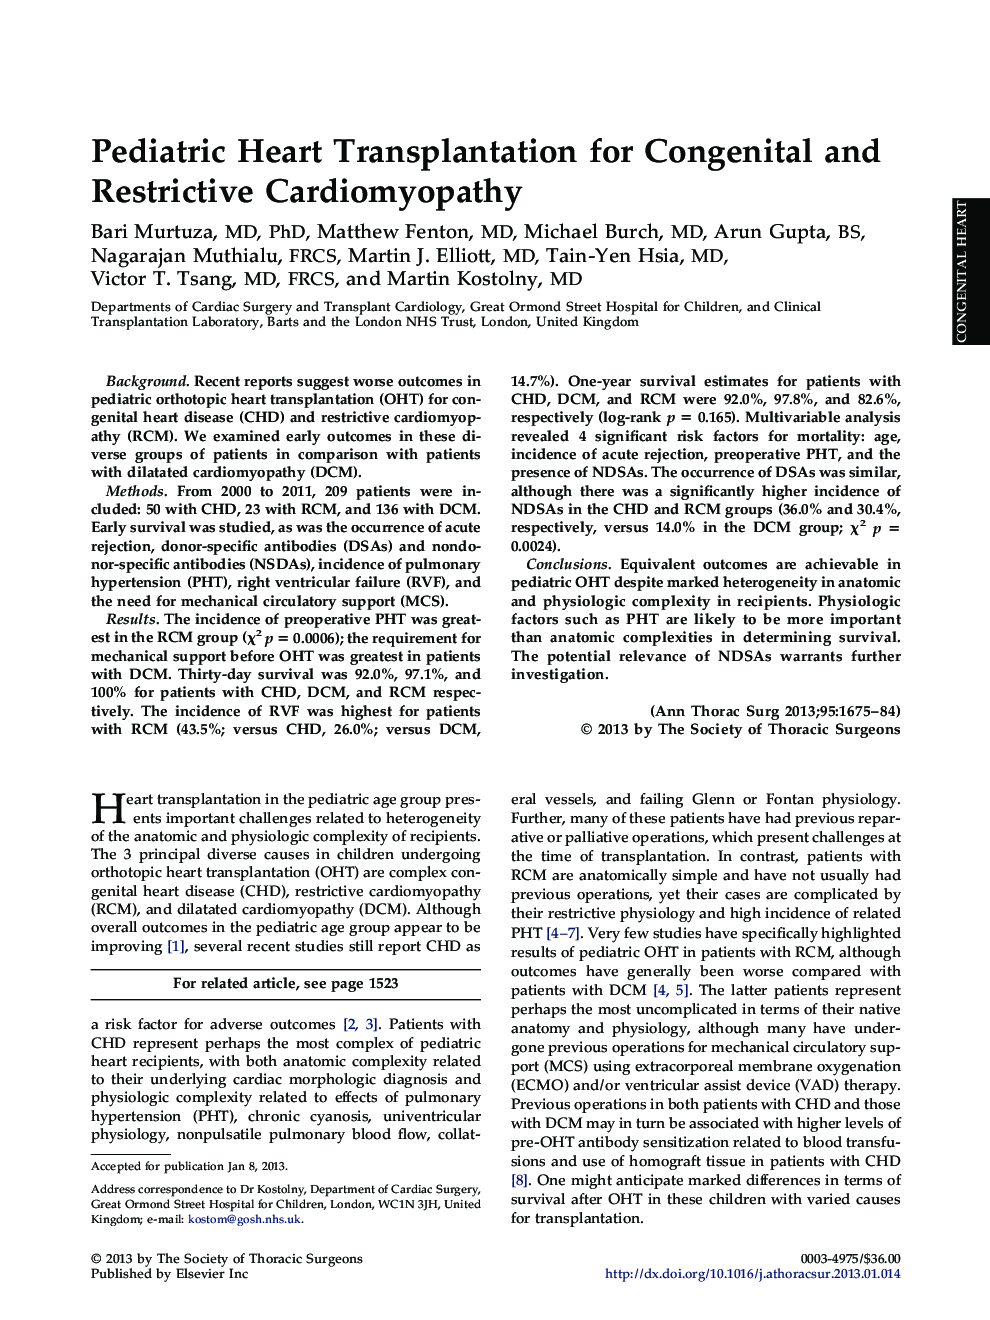 Pediatric Heart Transplantation for Congenital and Restrictive Cardiomyopathy